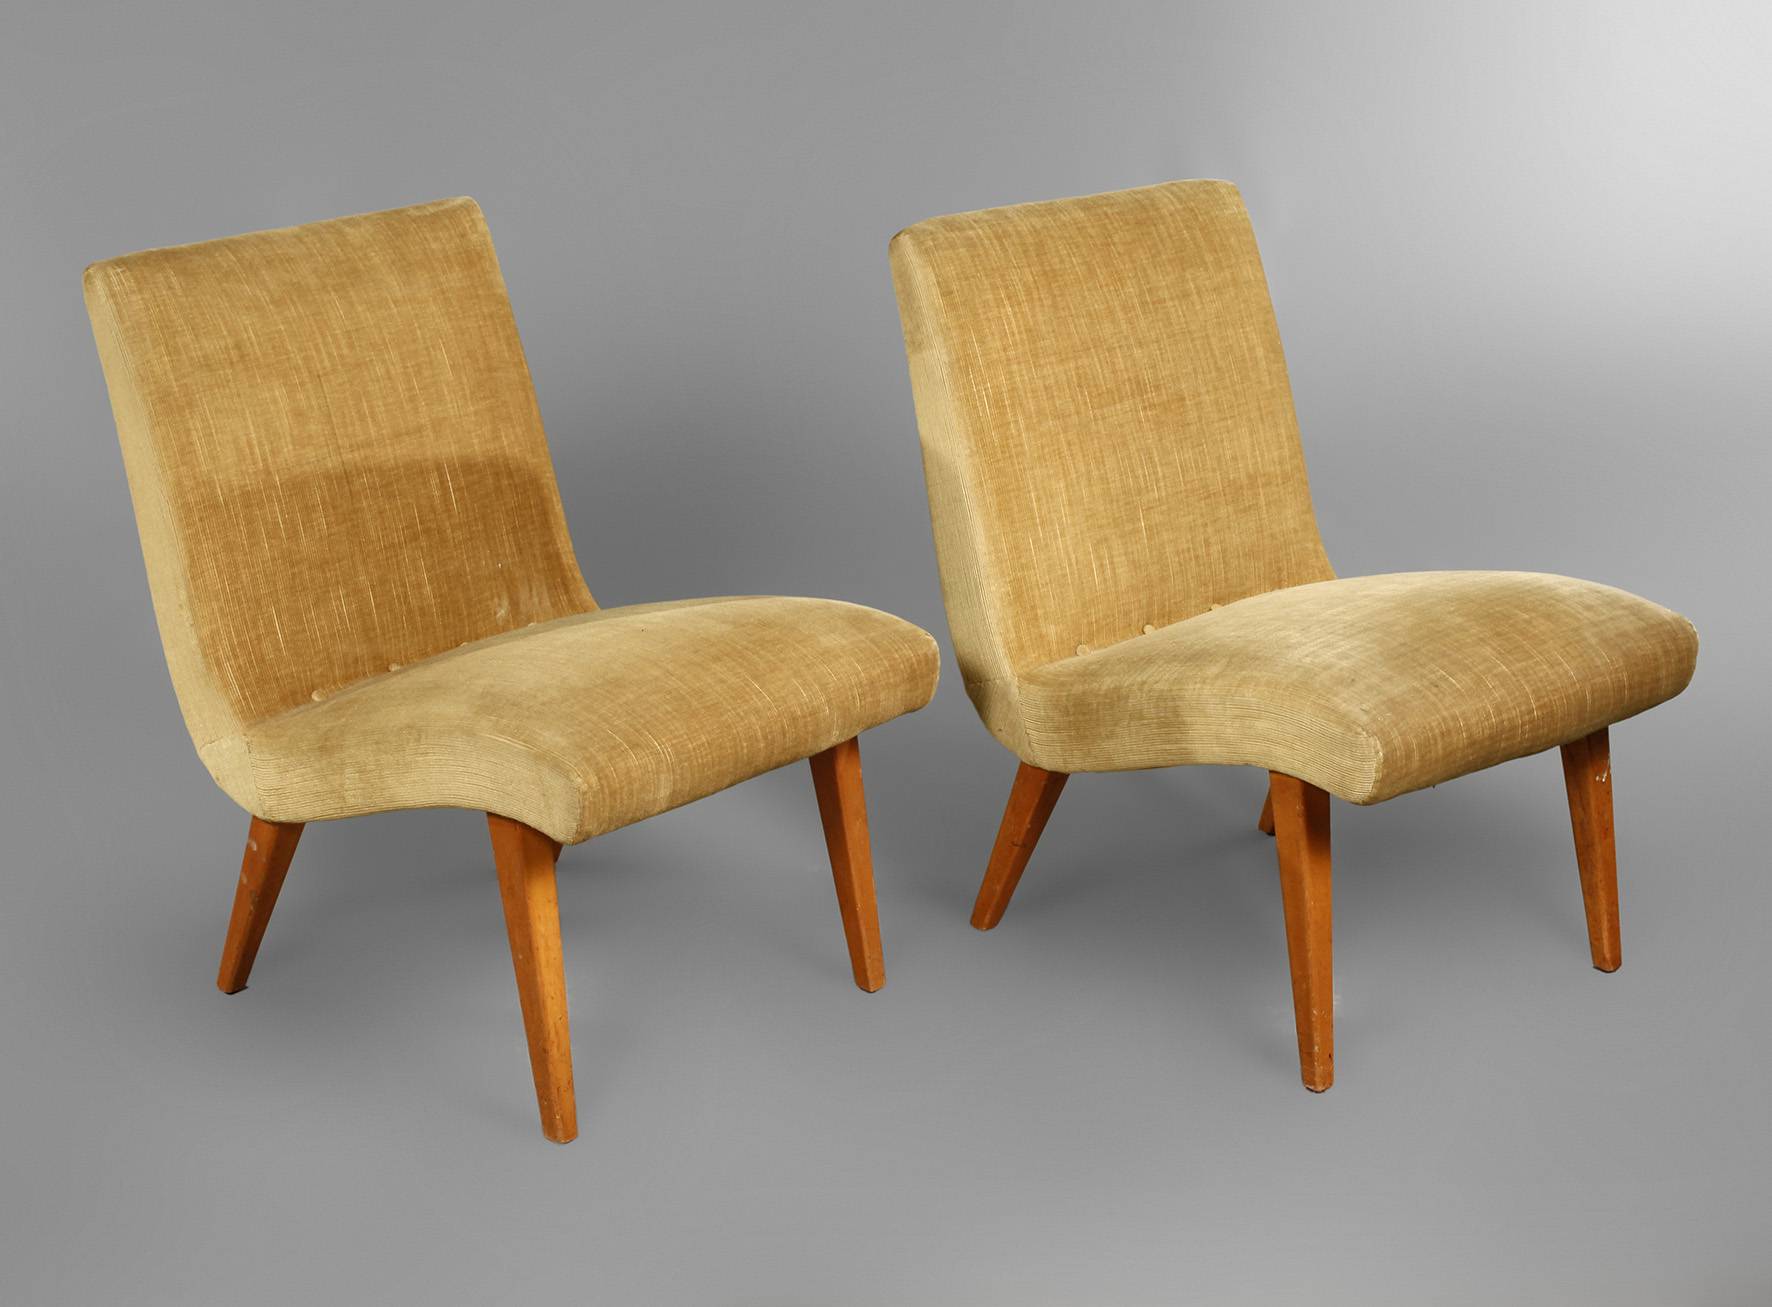 Zwei Sessel Modell ”Vostra”